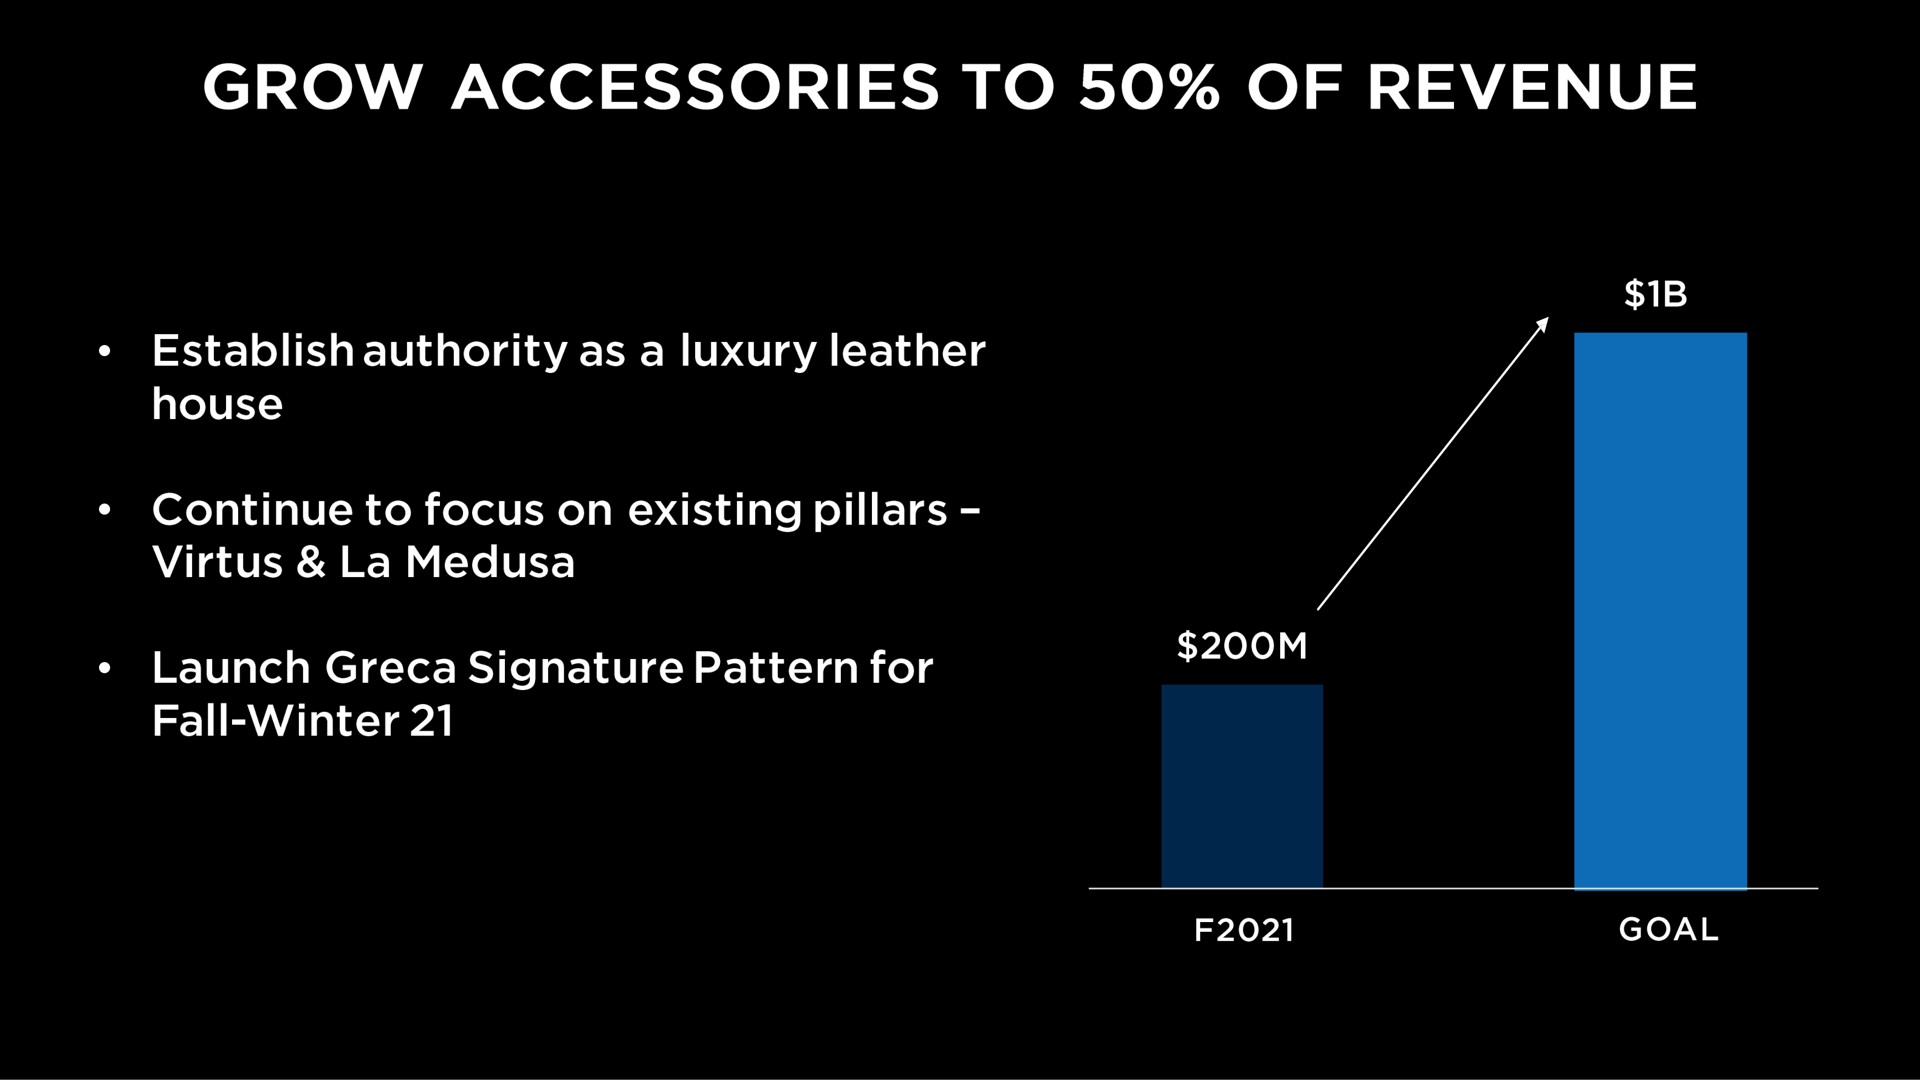 grow accessories to of revenue | Capri Holdings